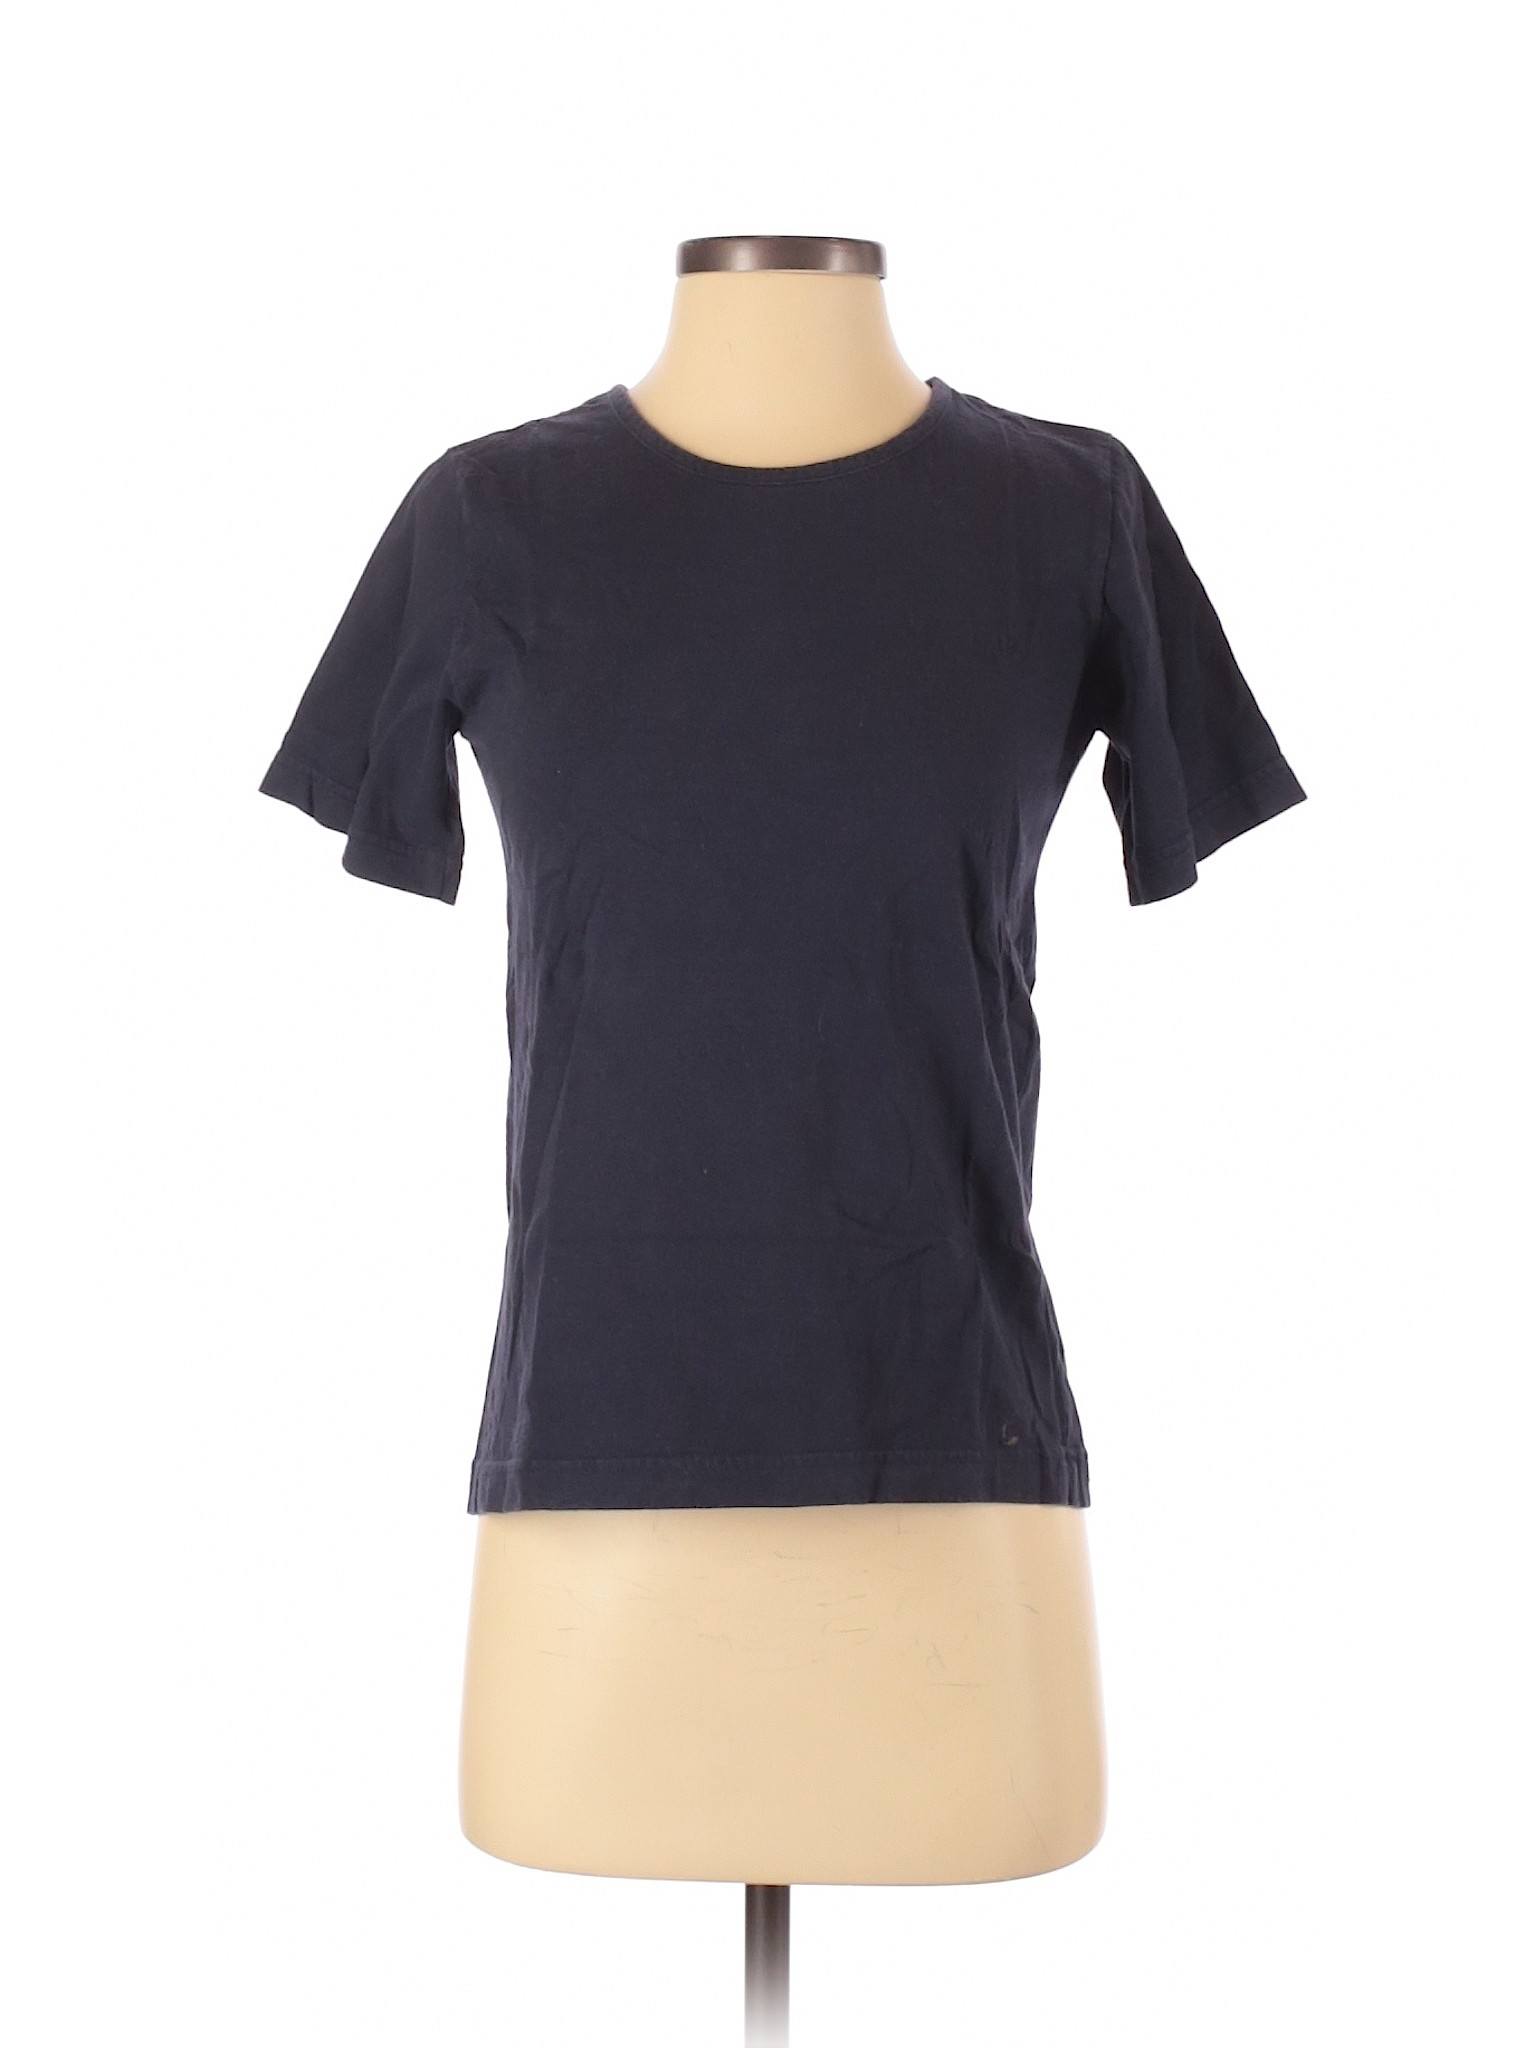 Laura Ashley Women Blue Short Sleeve T-Shirt S | eBay